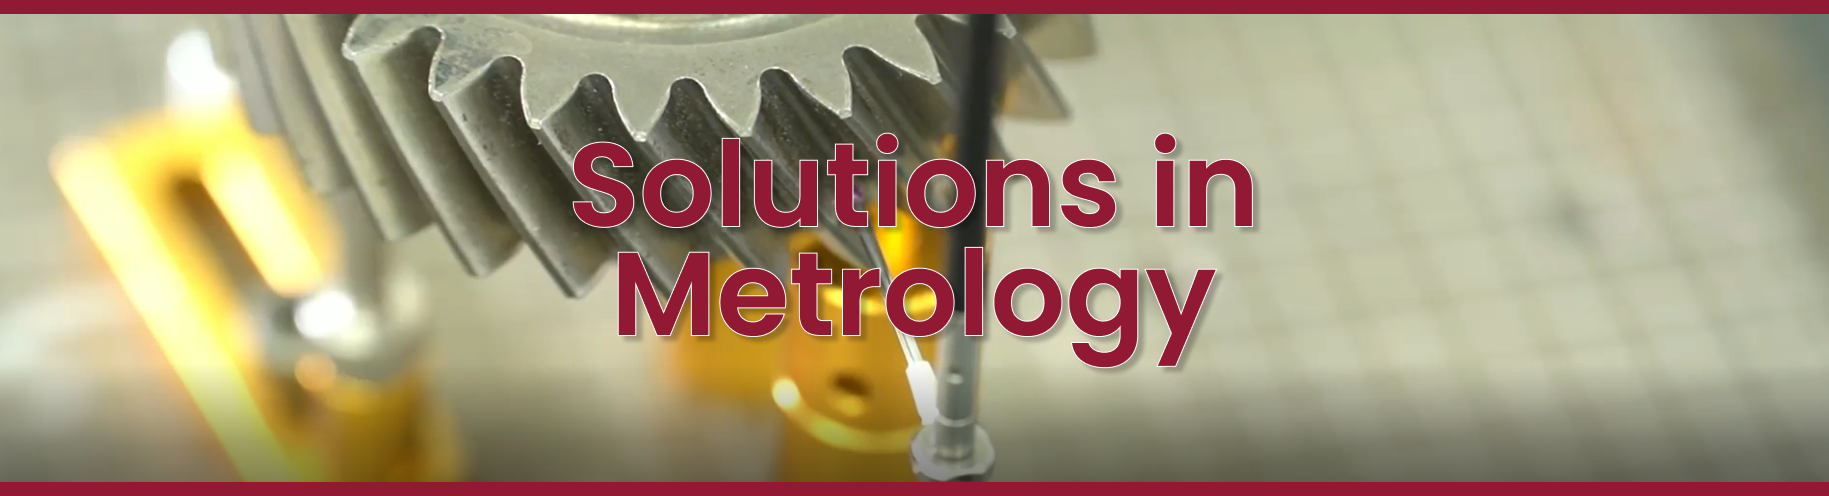 Metrology In Solutions